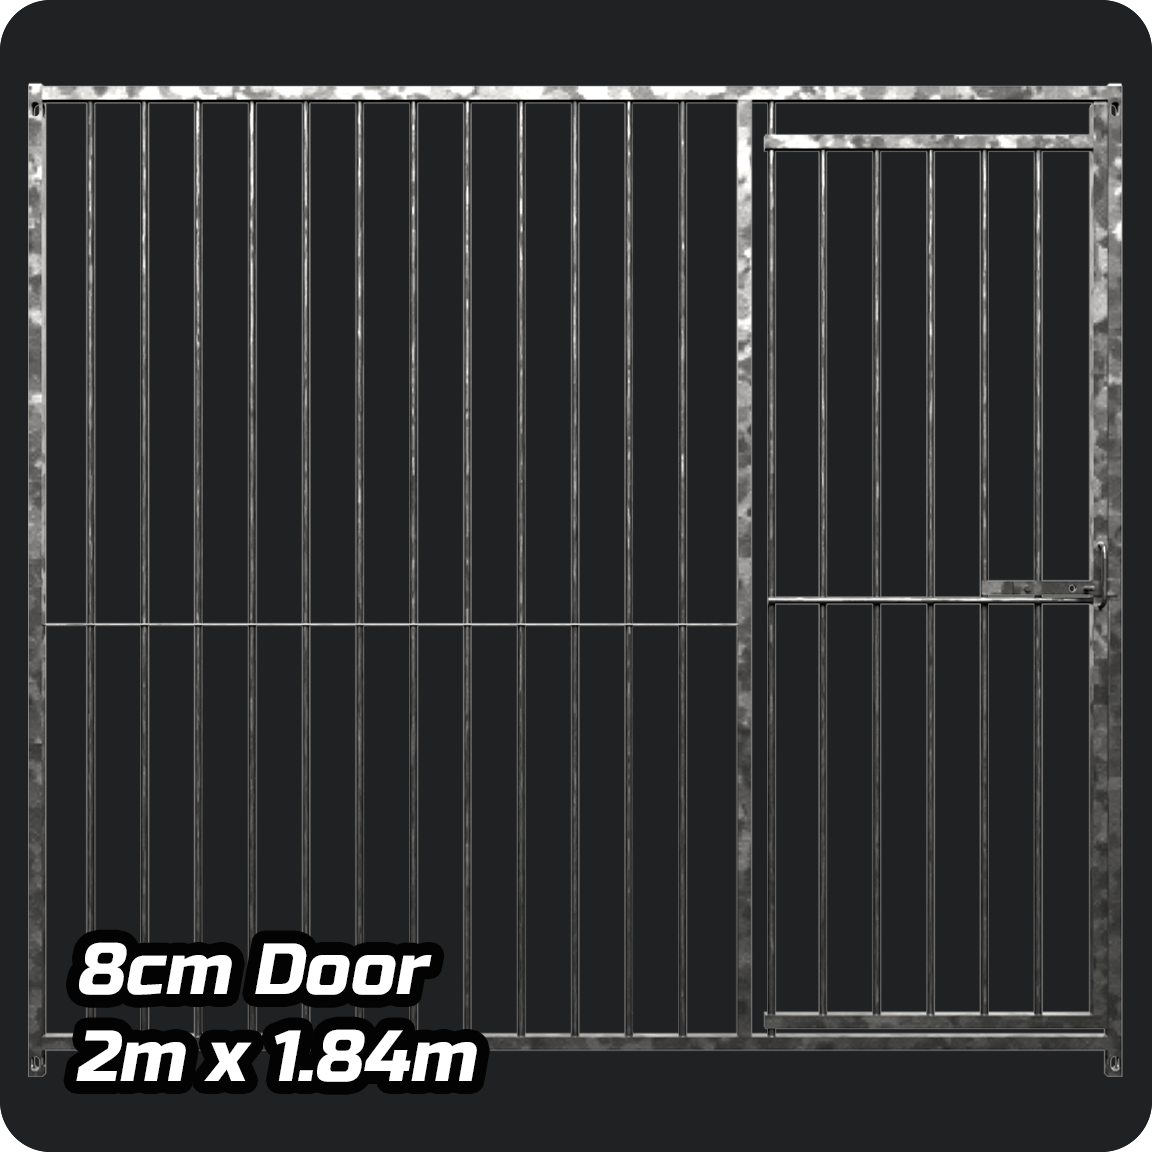 2.0m x 1.84m DOOR - Heavy duty Premium Galvanized - 8cm Gap Panels